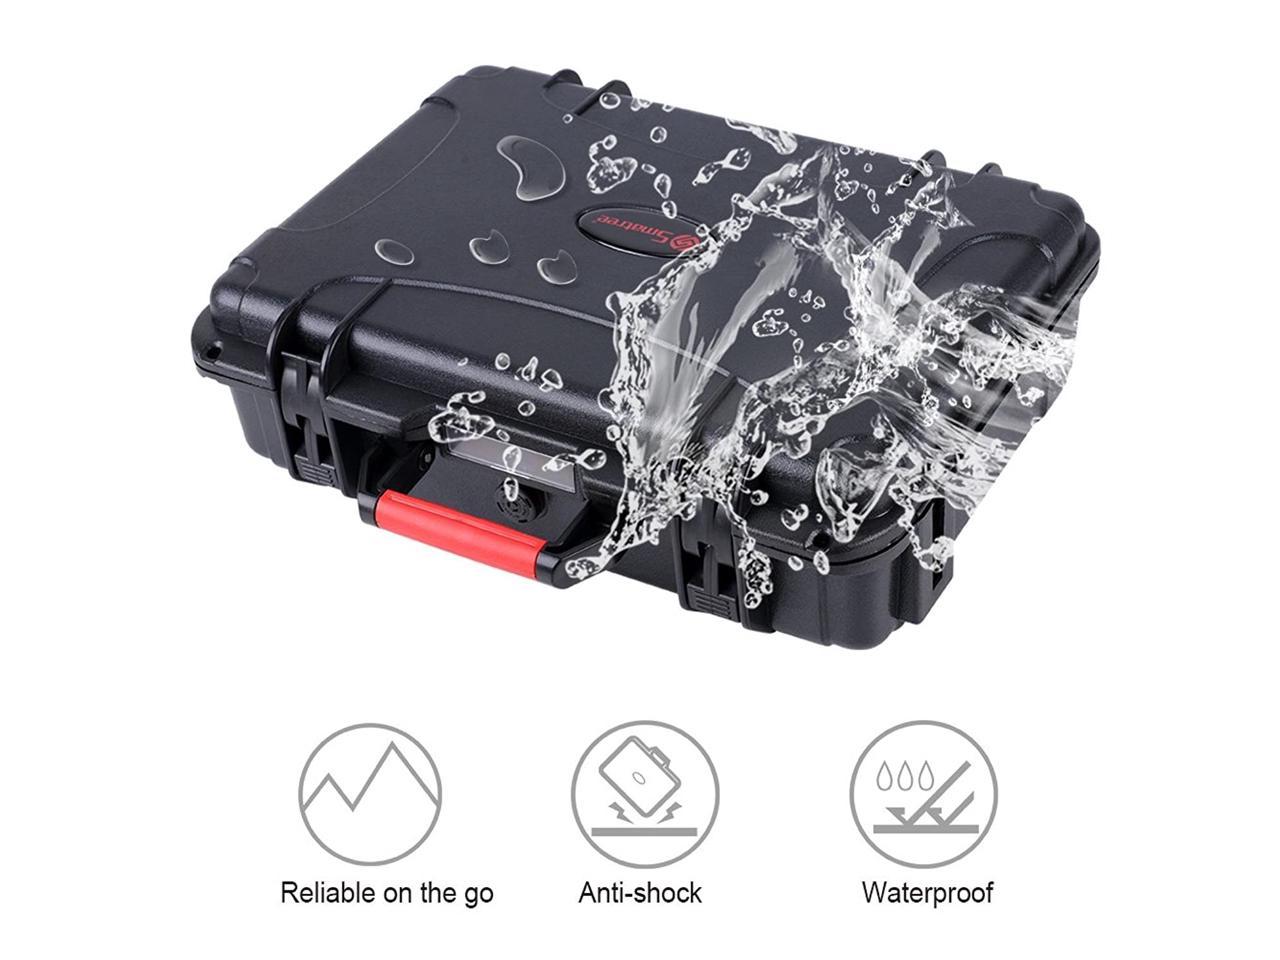 Smatree Waterproof Carrying Case Compatible for Mavic Platinum/DJI Mavic Pro Mavic Fly More Combo（Not fit for Mavic 2 Pro/Mavic 2 Zoom）